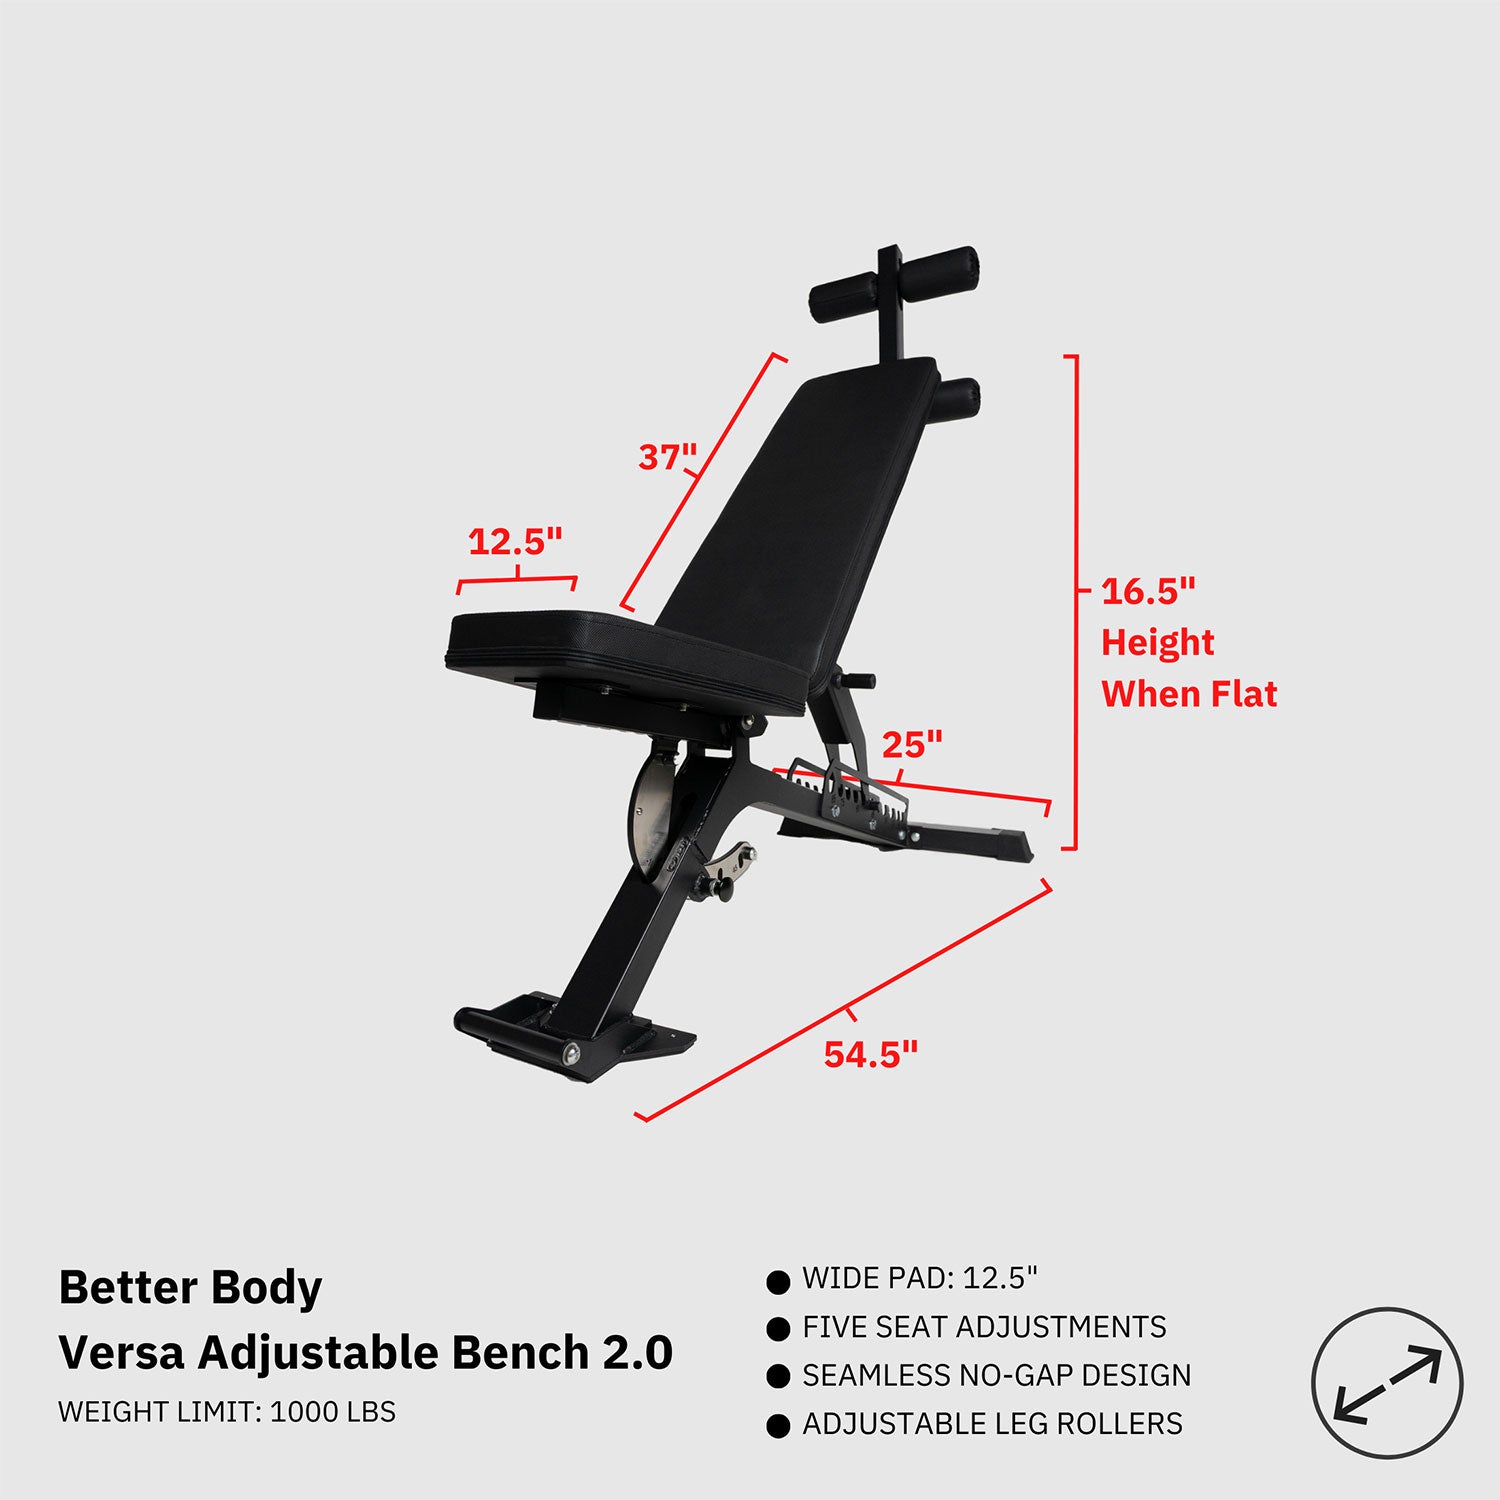 Better Body Versa Adjustable Bench 2.0 Footprint